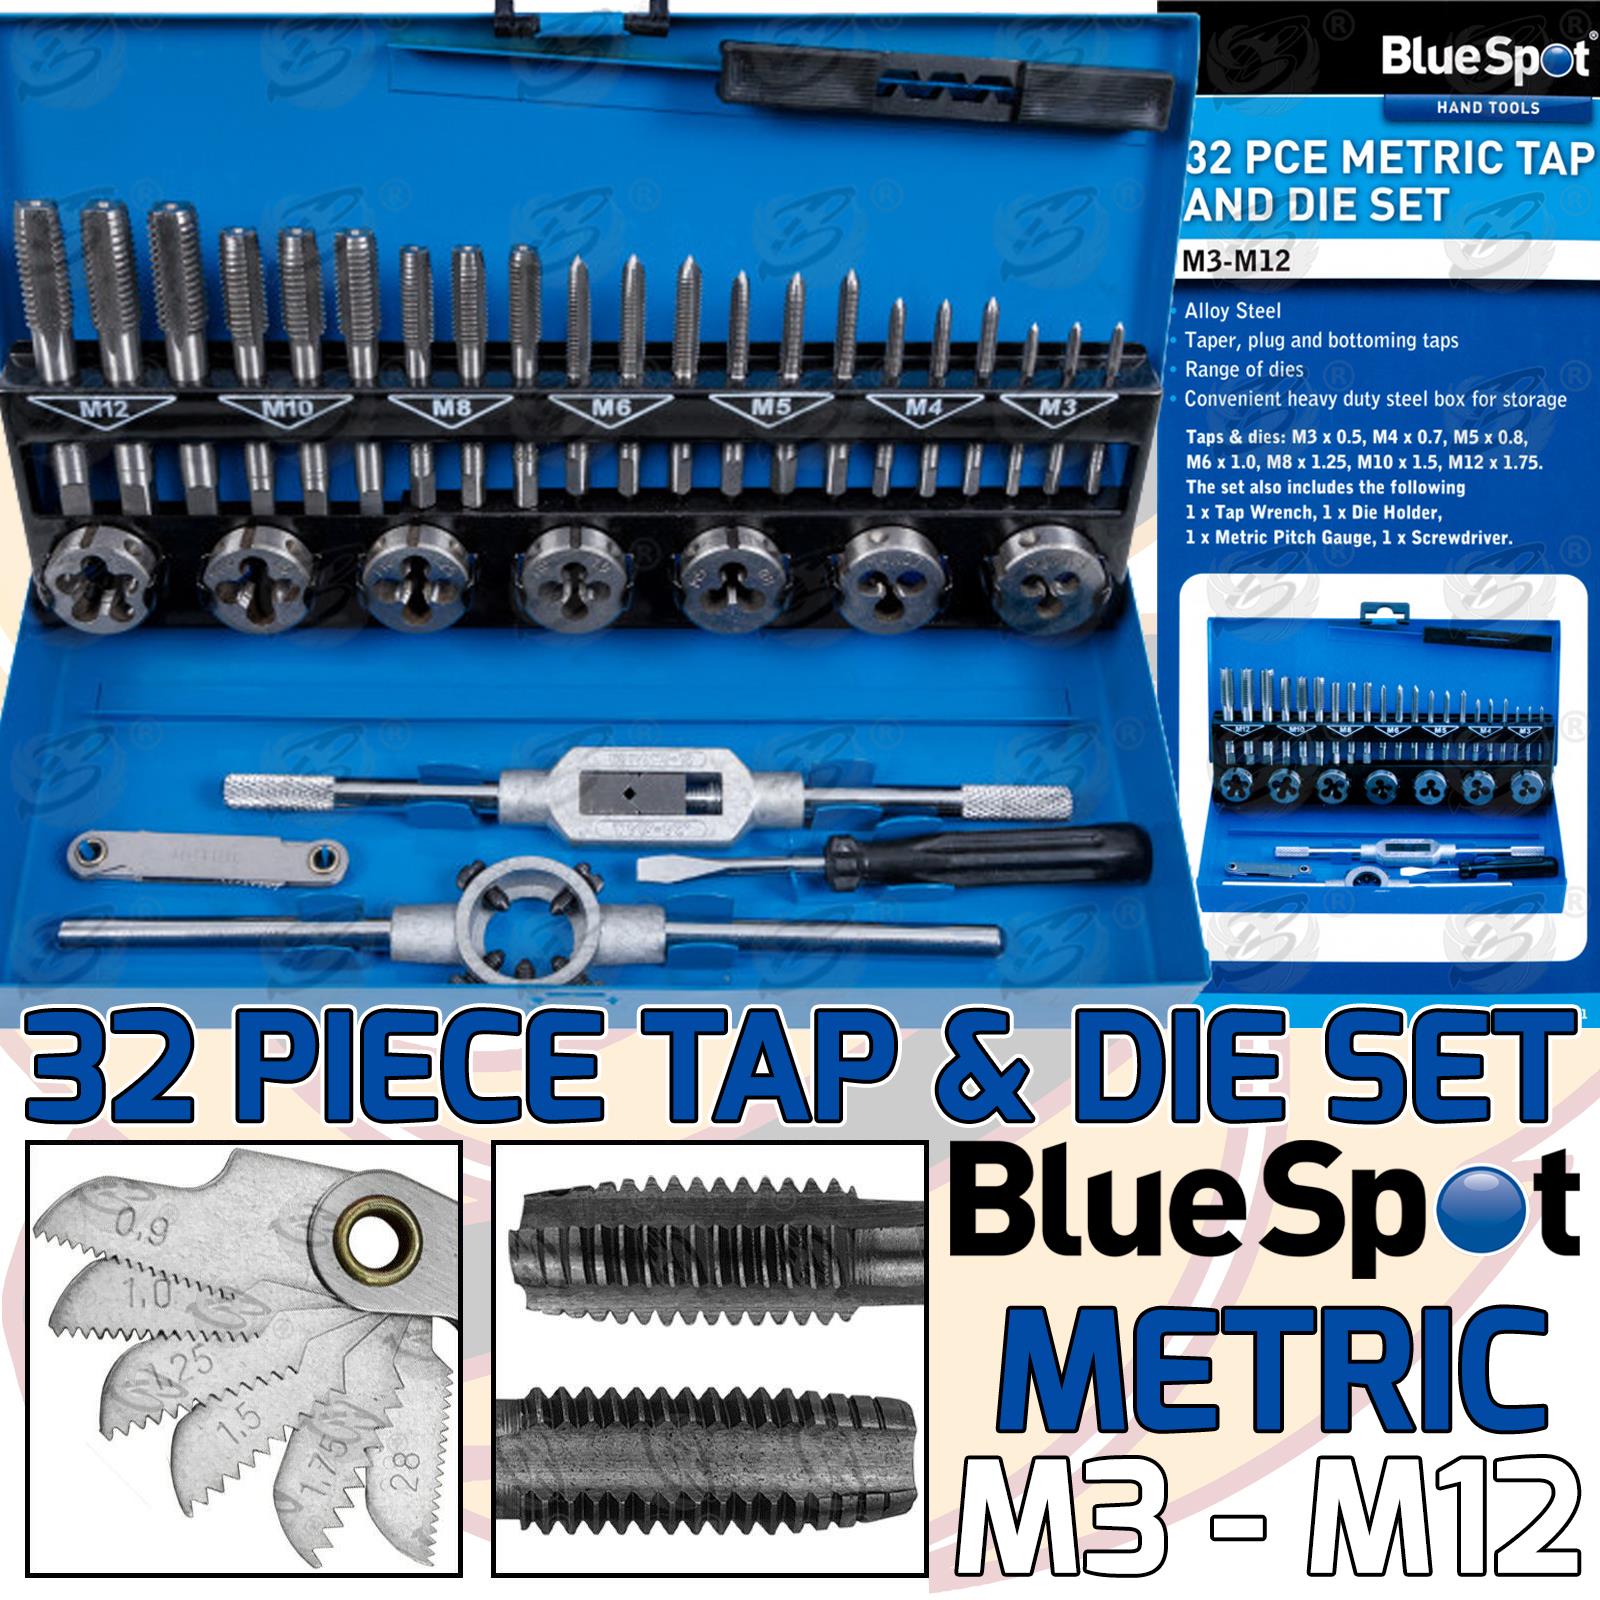 BLUESPOT 32PCS METRIC TAP & DIE SET M3 - M12